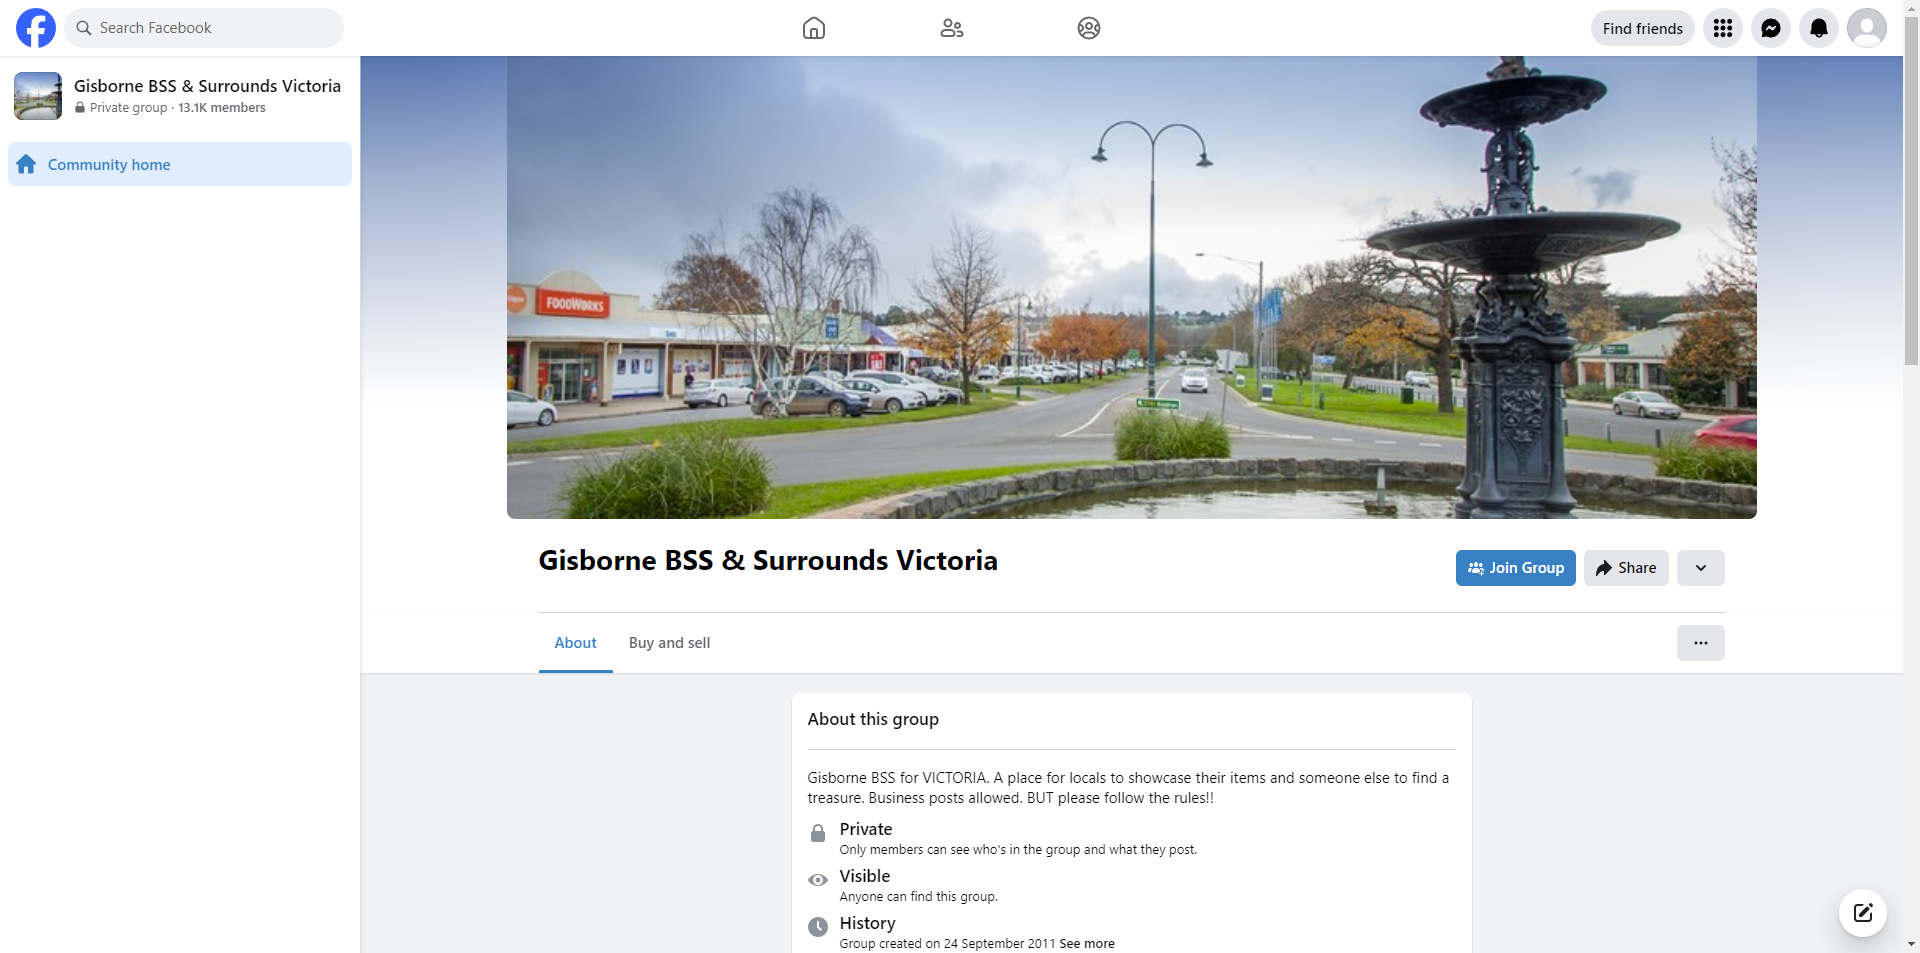 Gisborne BSS & Surrounds Victoria